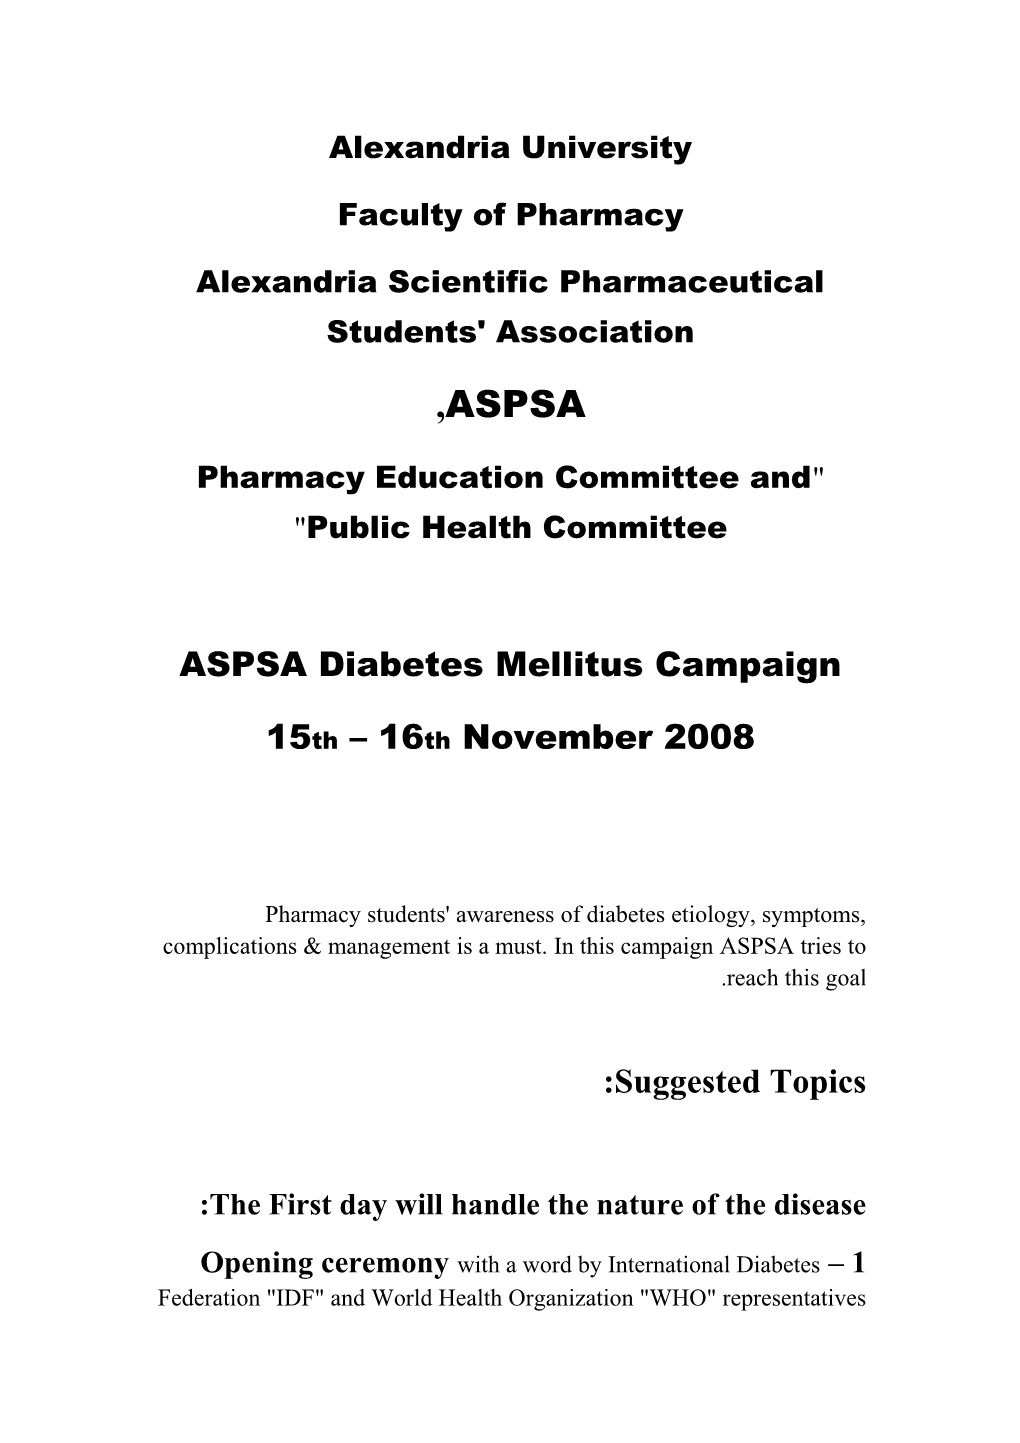 Alexandria Scientific Pharmaceutical Students' Association